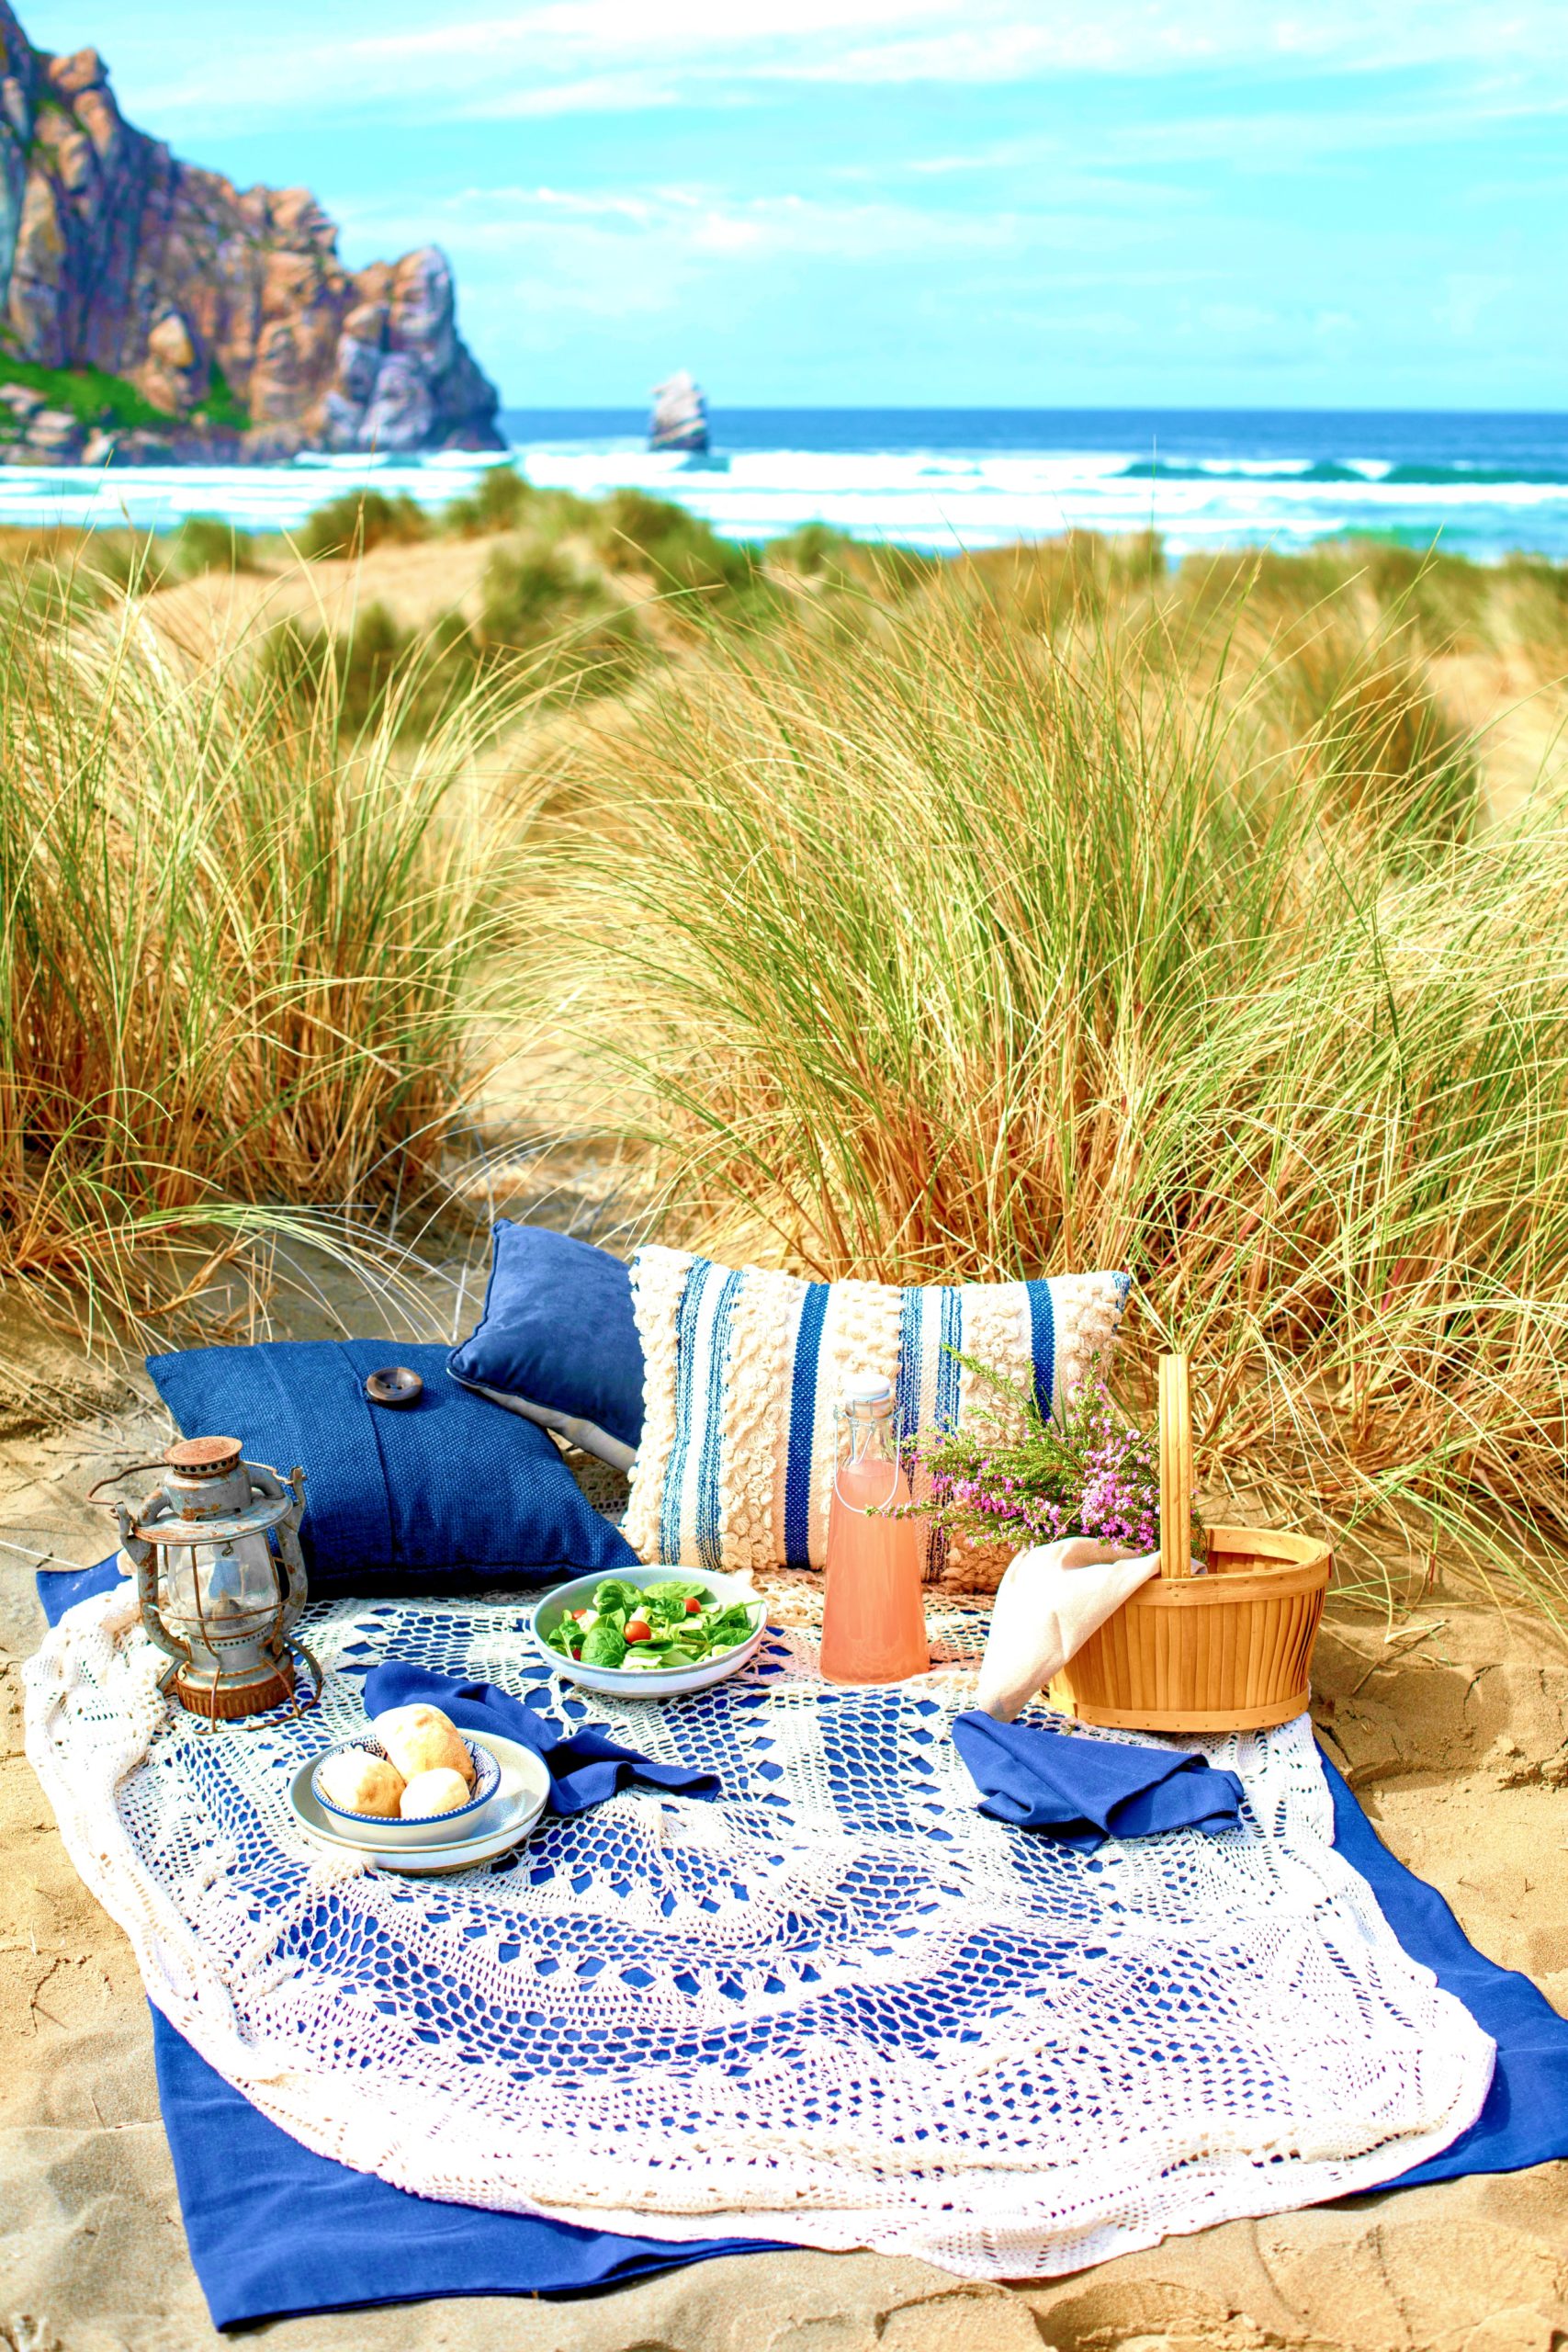 <img src="ana.jpg" alt="ana picnic beach date night ideas in los angeles"/> 